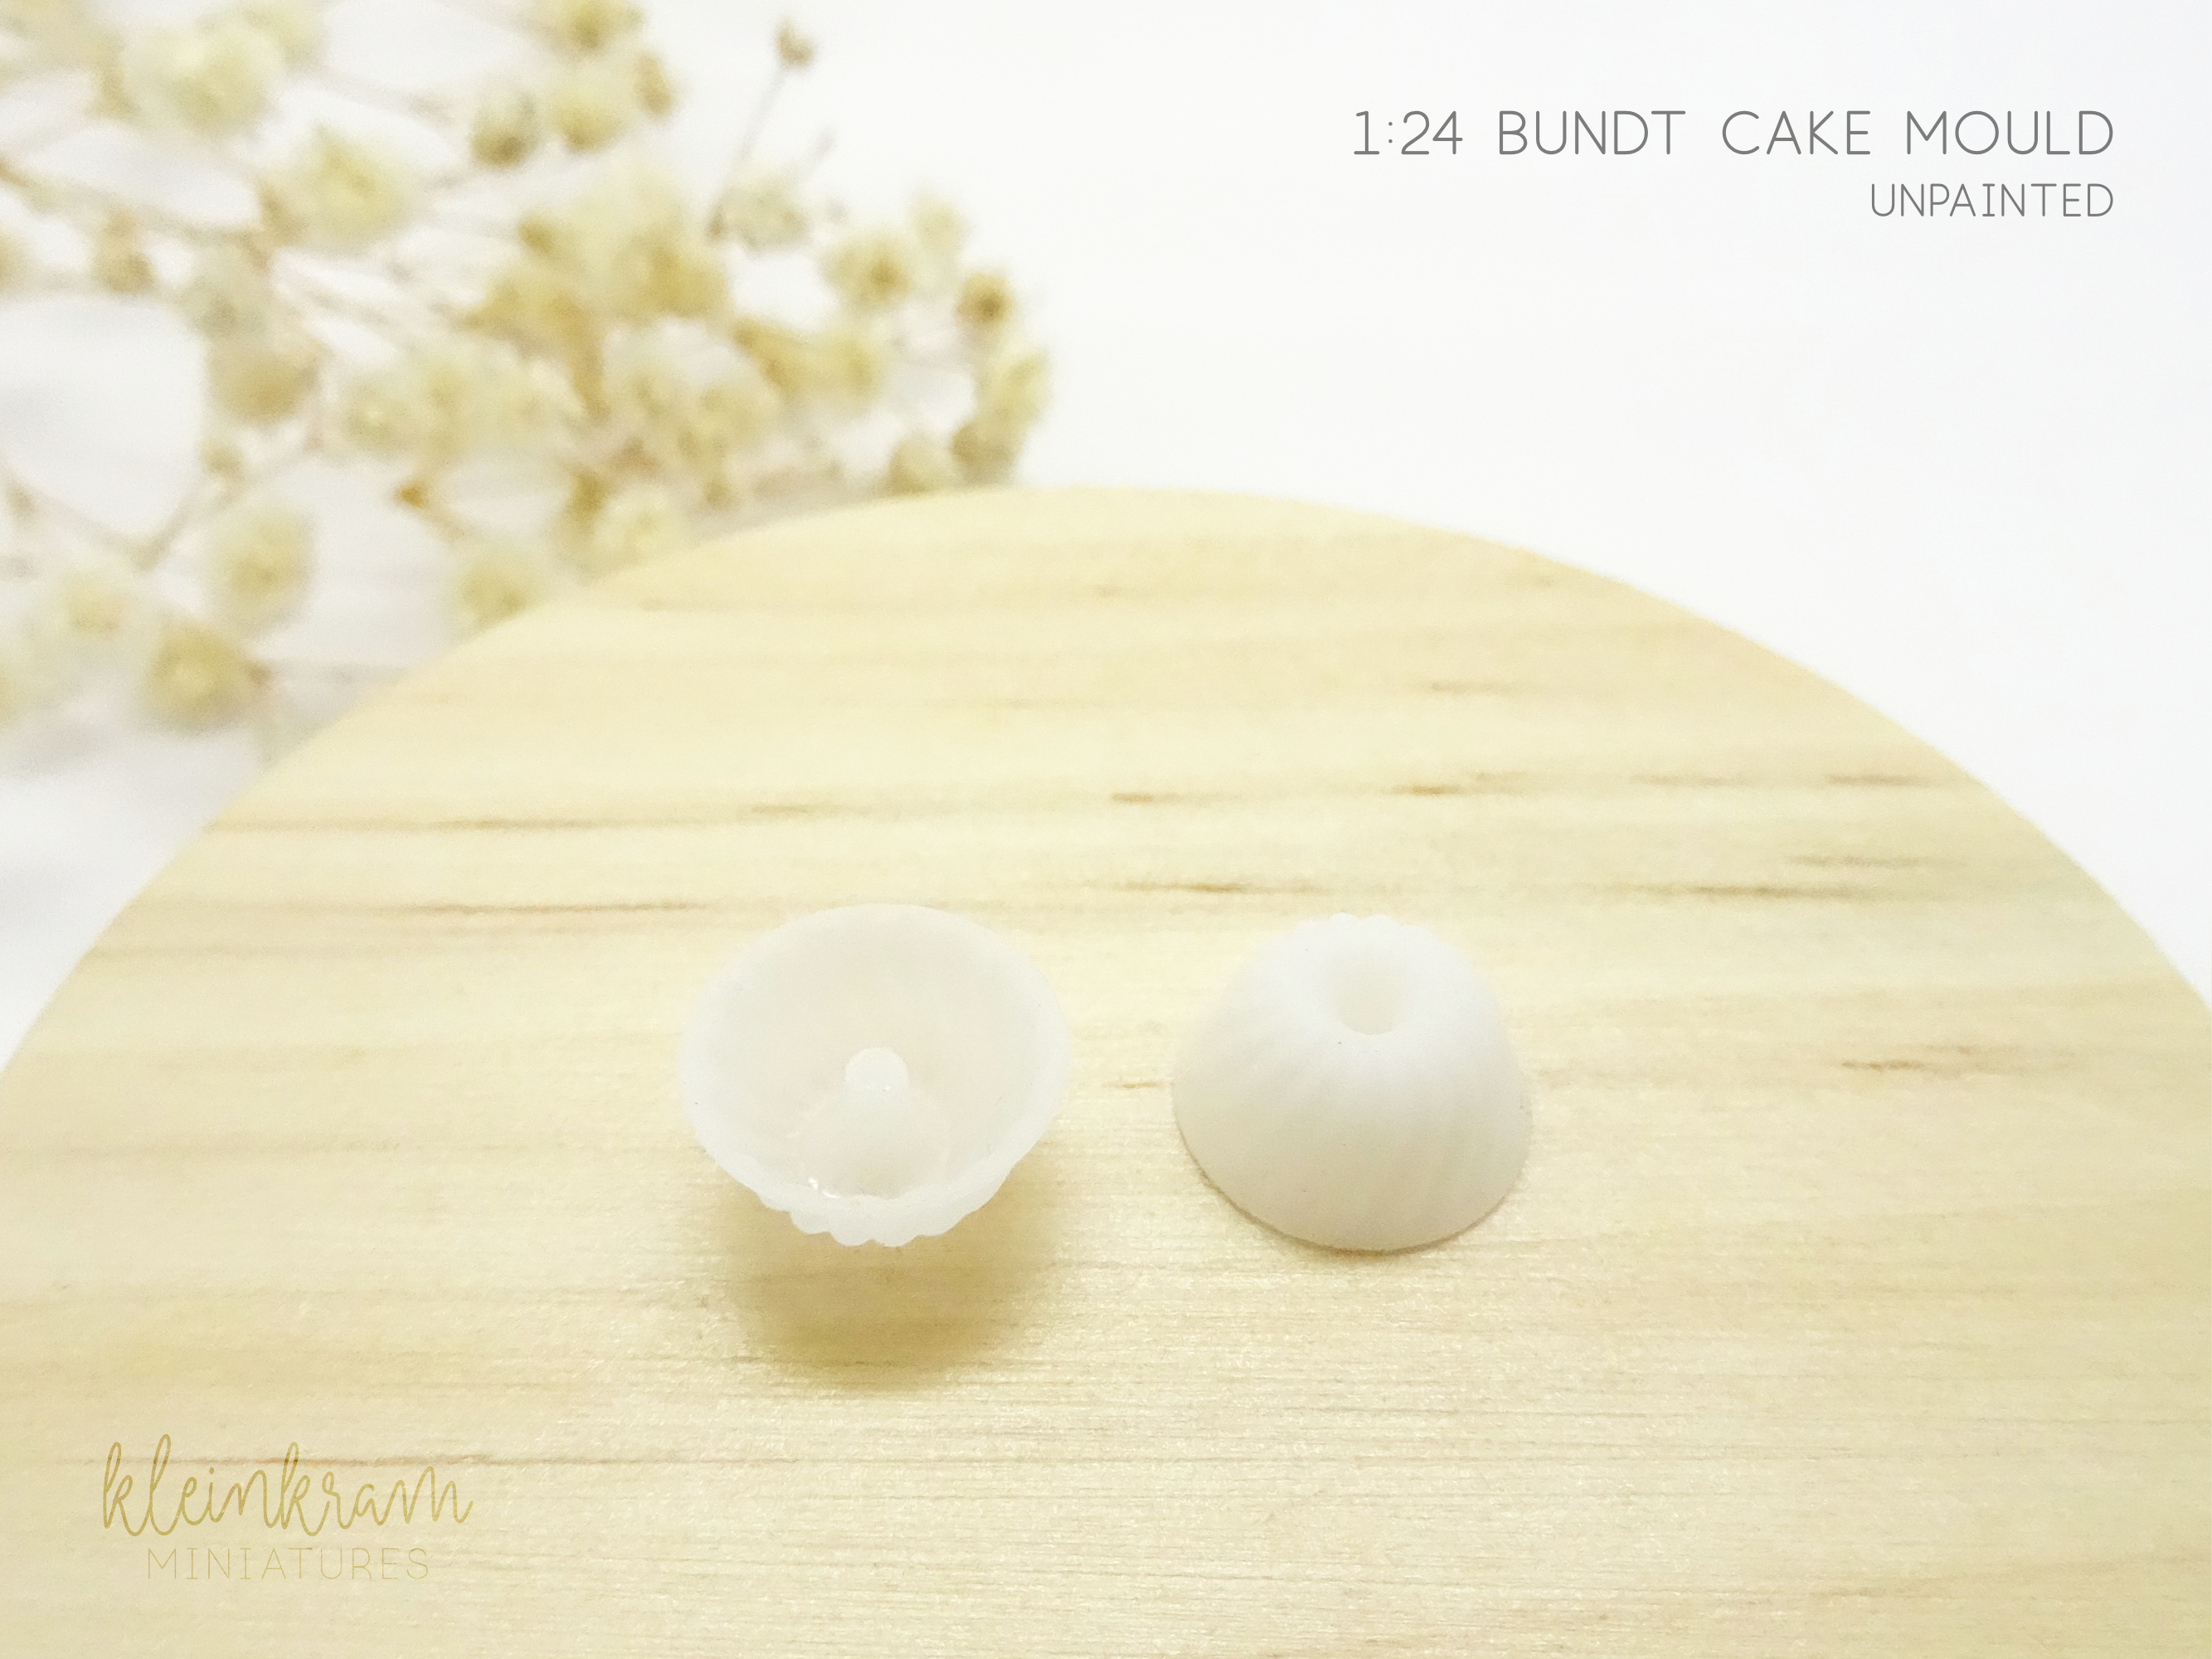 Baking Mould Bundt Cake - 1/24 Miniature